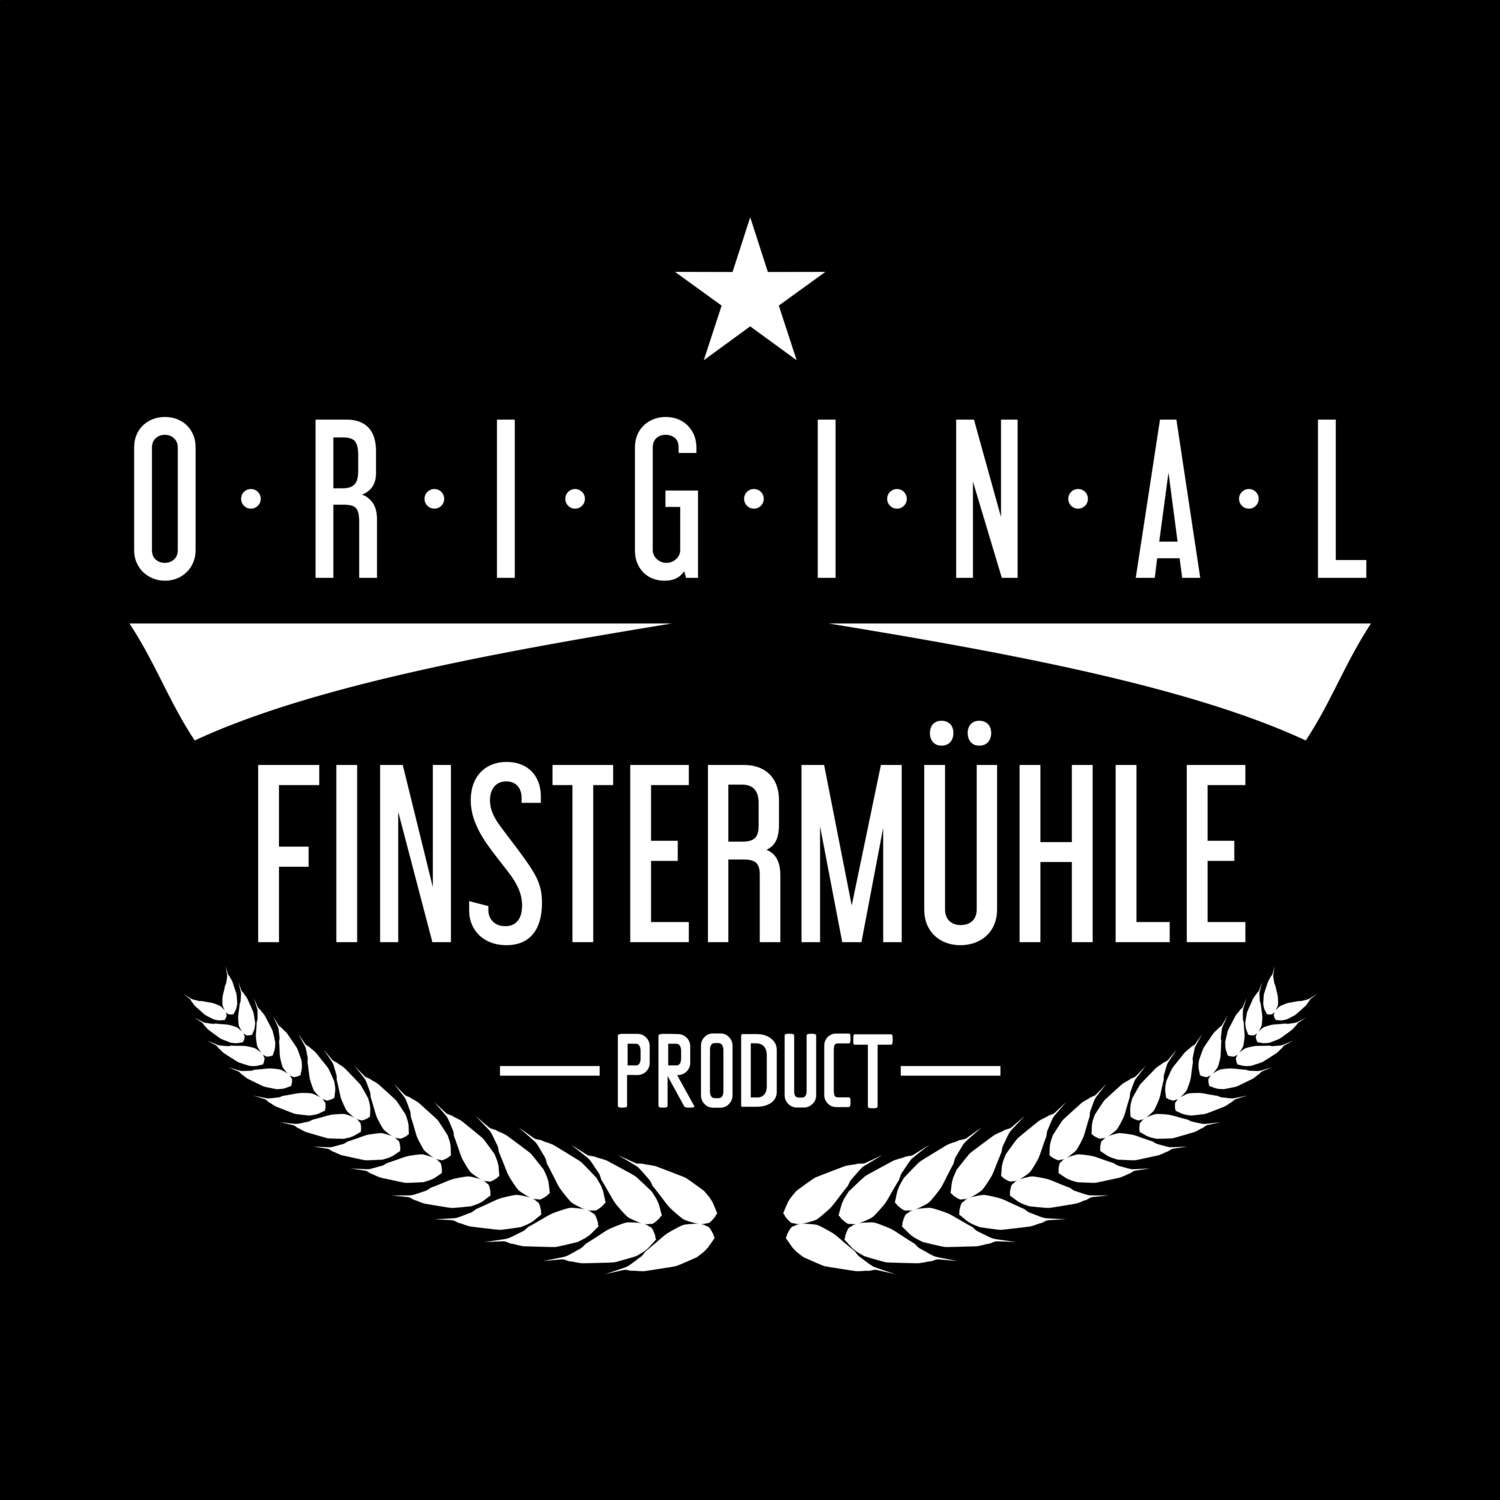 Finstermühle T-Shirt »Original Product«